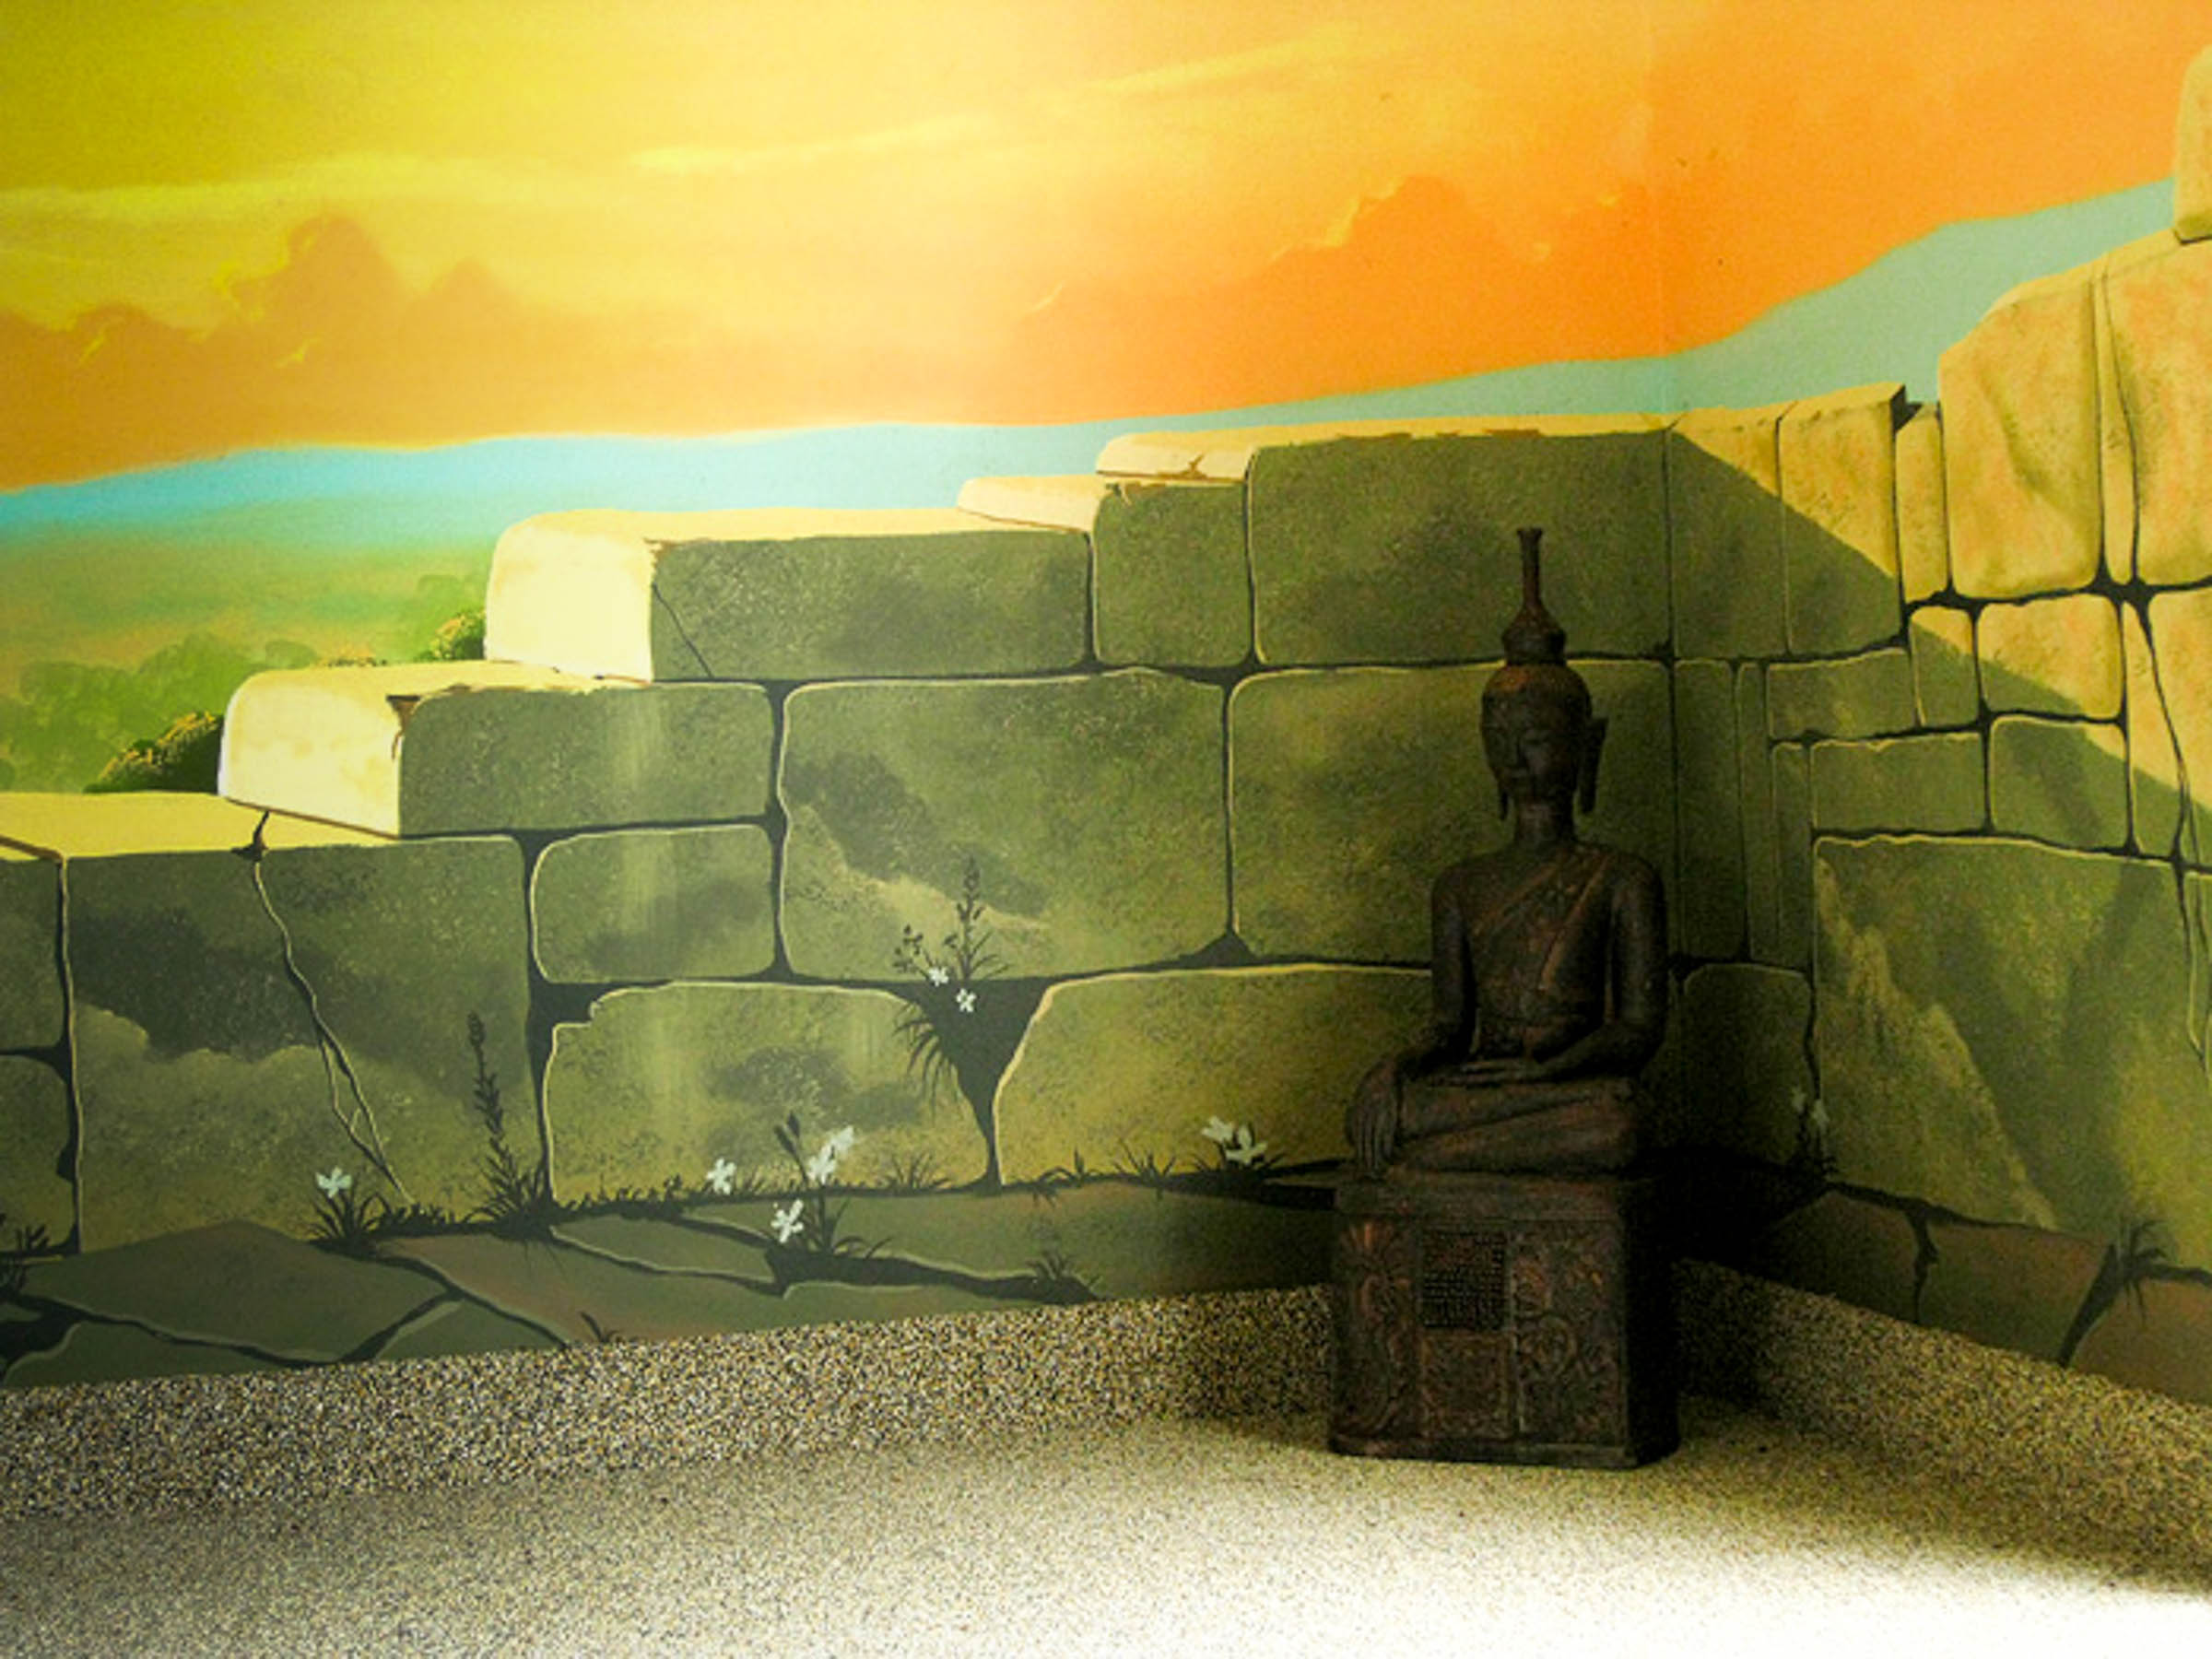 Seated Buddhist statue decorates the corner